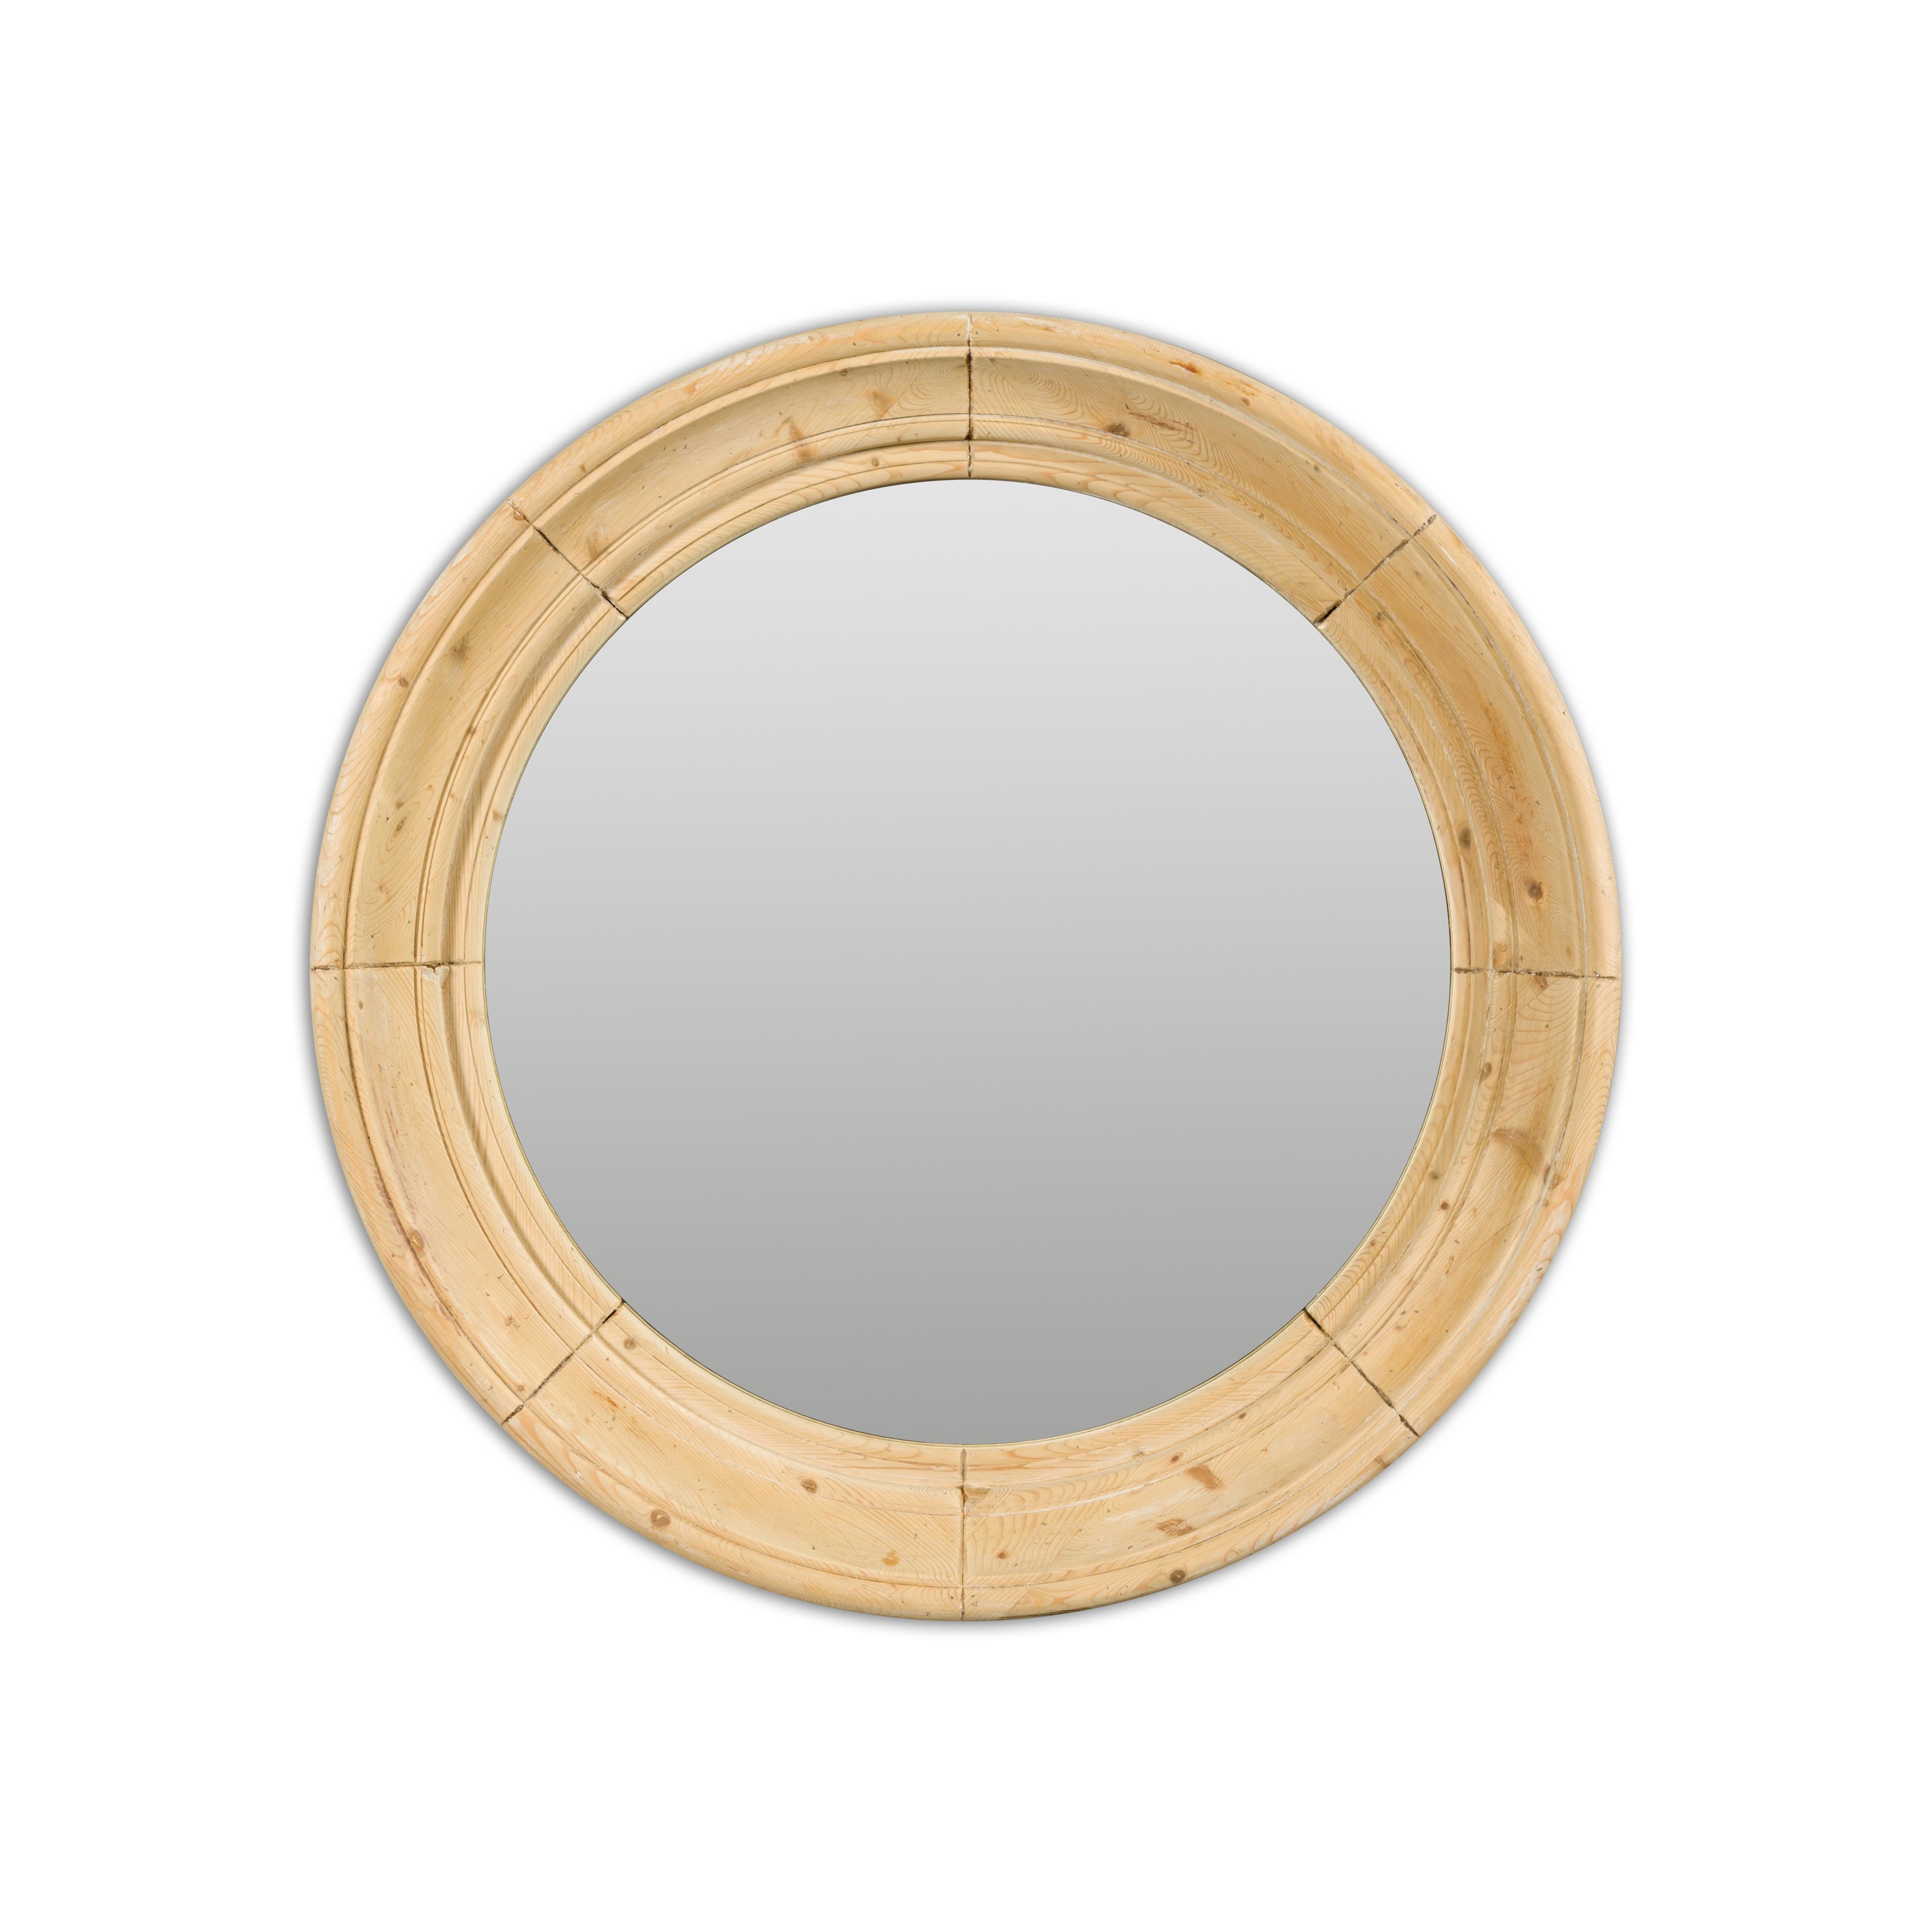 Rustic English Midcentury Pine Round Bullseye Mirror with Natural Finish 11